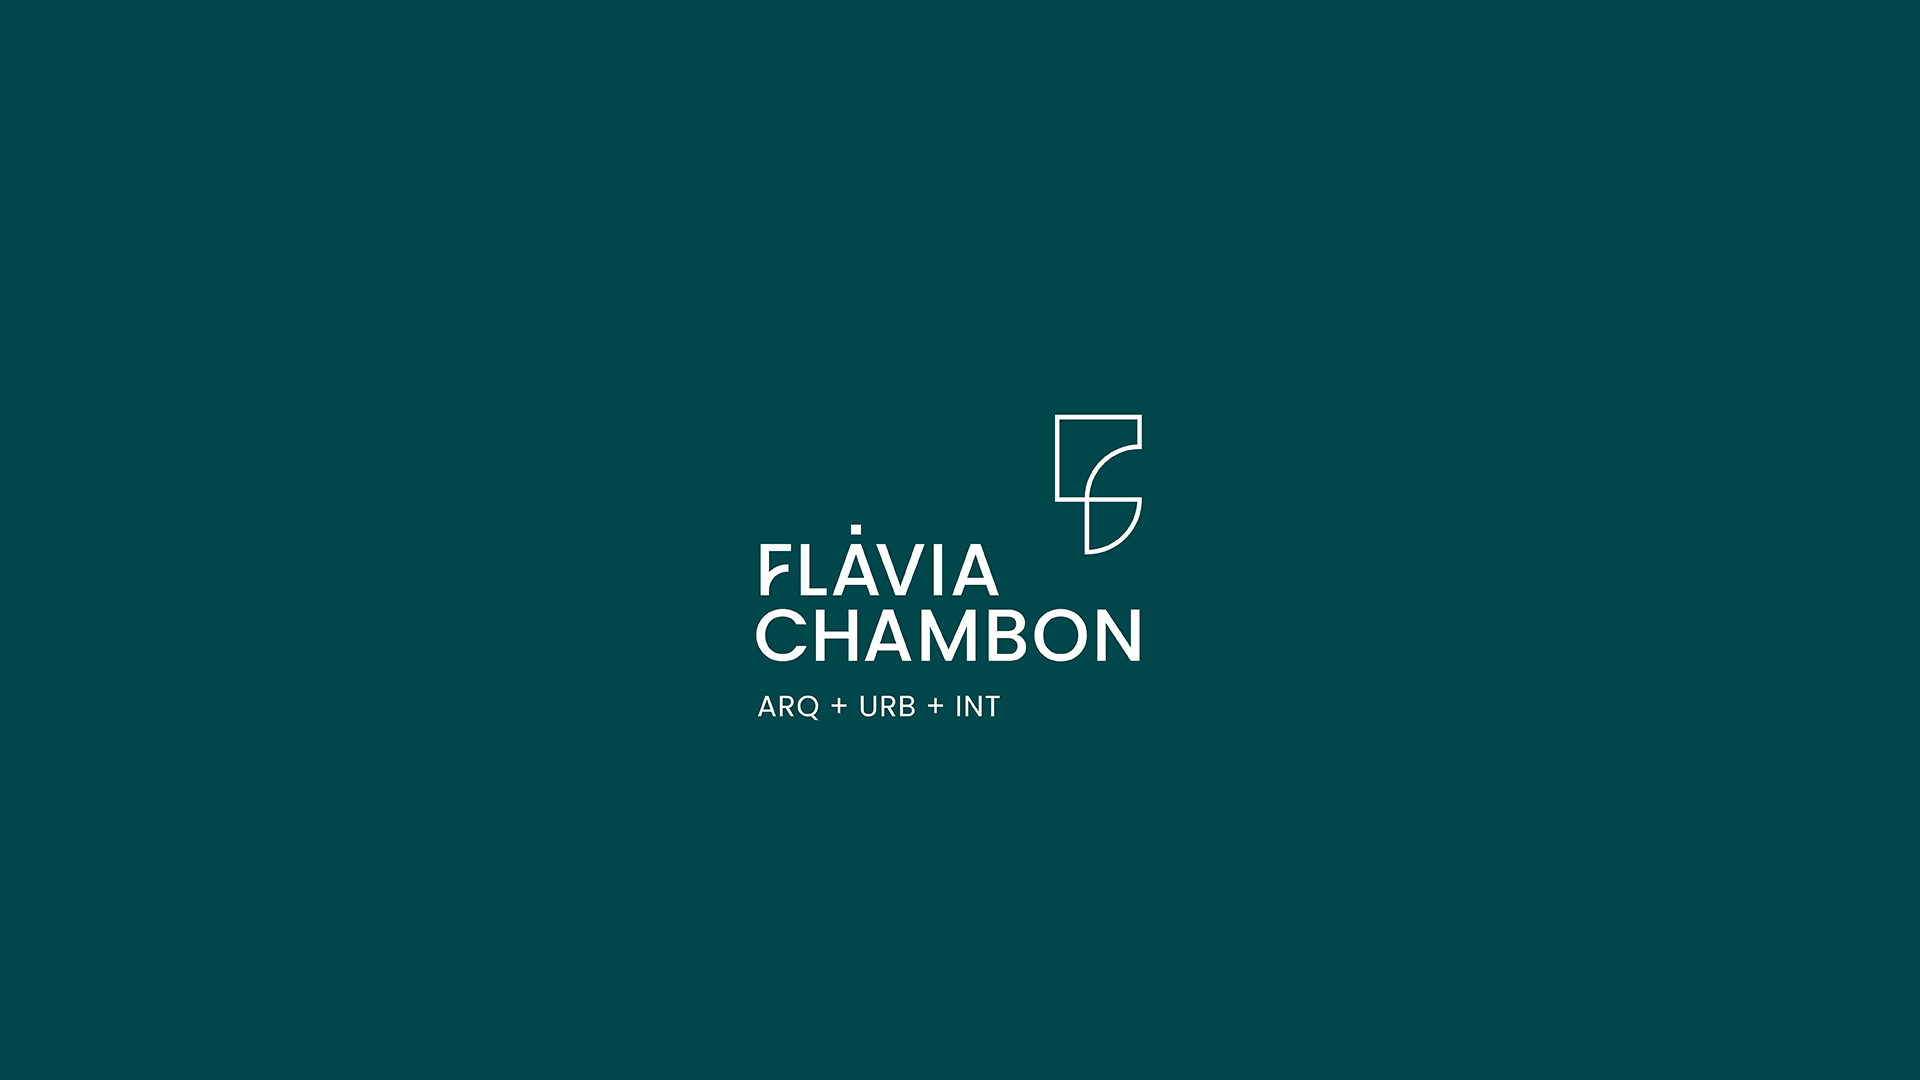 Apresentação_Flavia-Chambon_0422